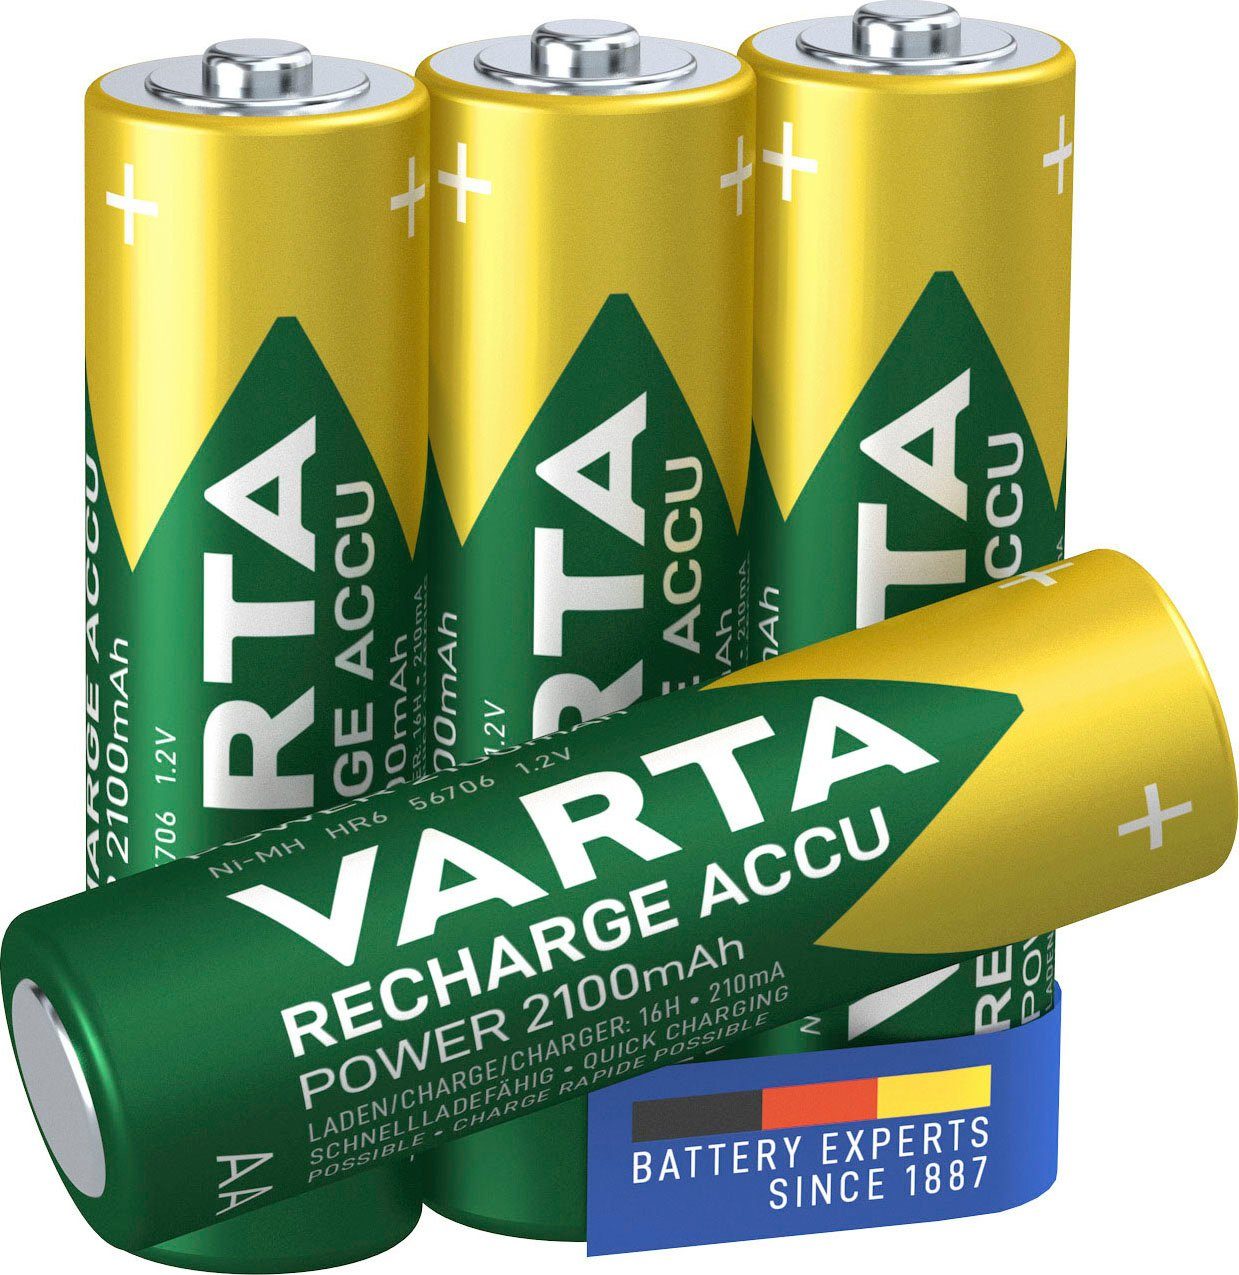 Varta 2100 mAh AA ACCU Rechargeable Ni-MH Batteries Pack of 4 